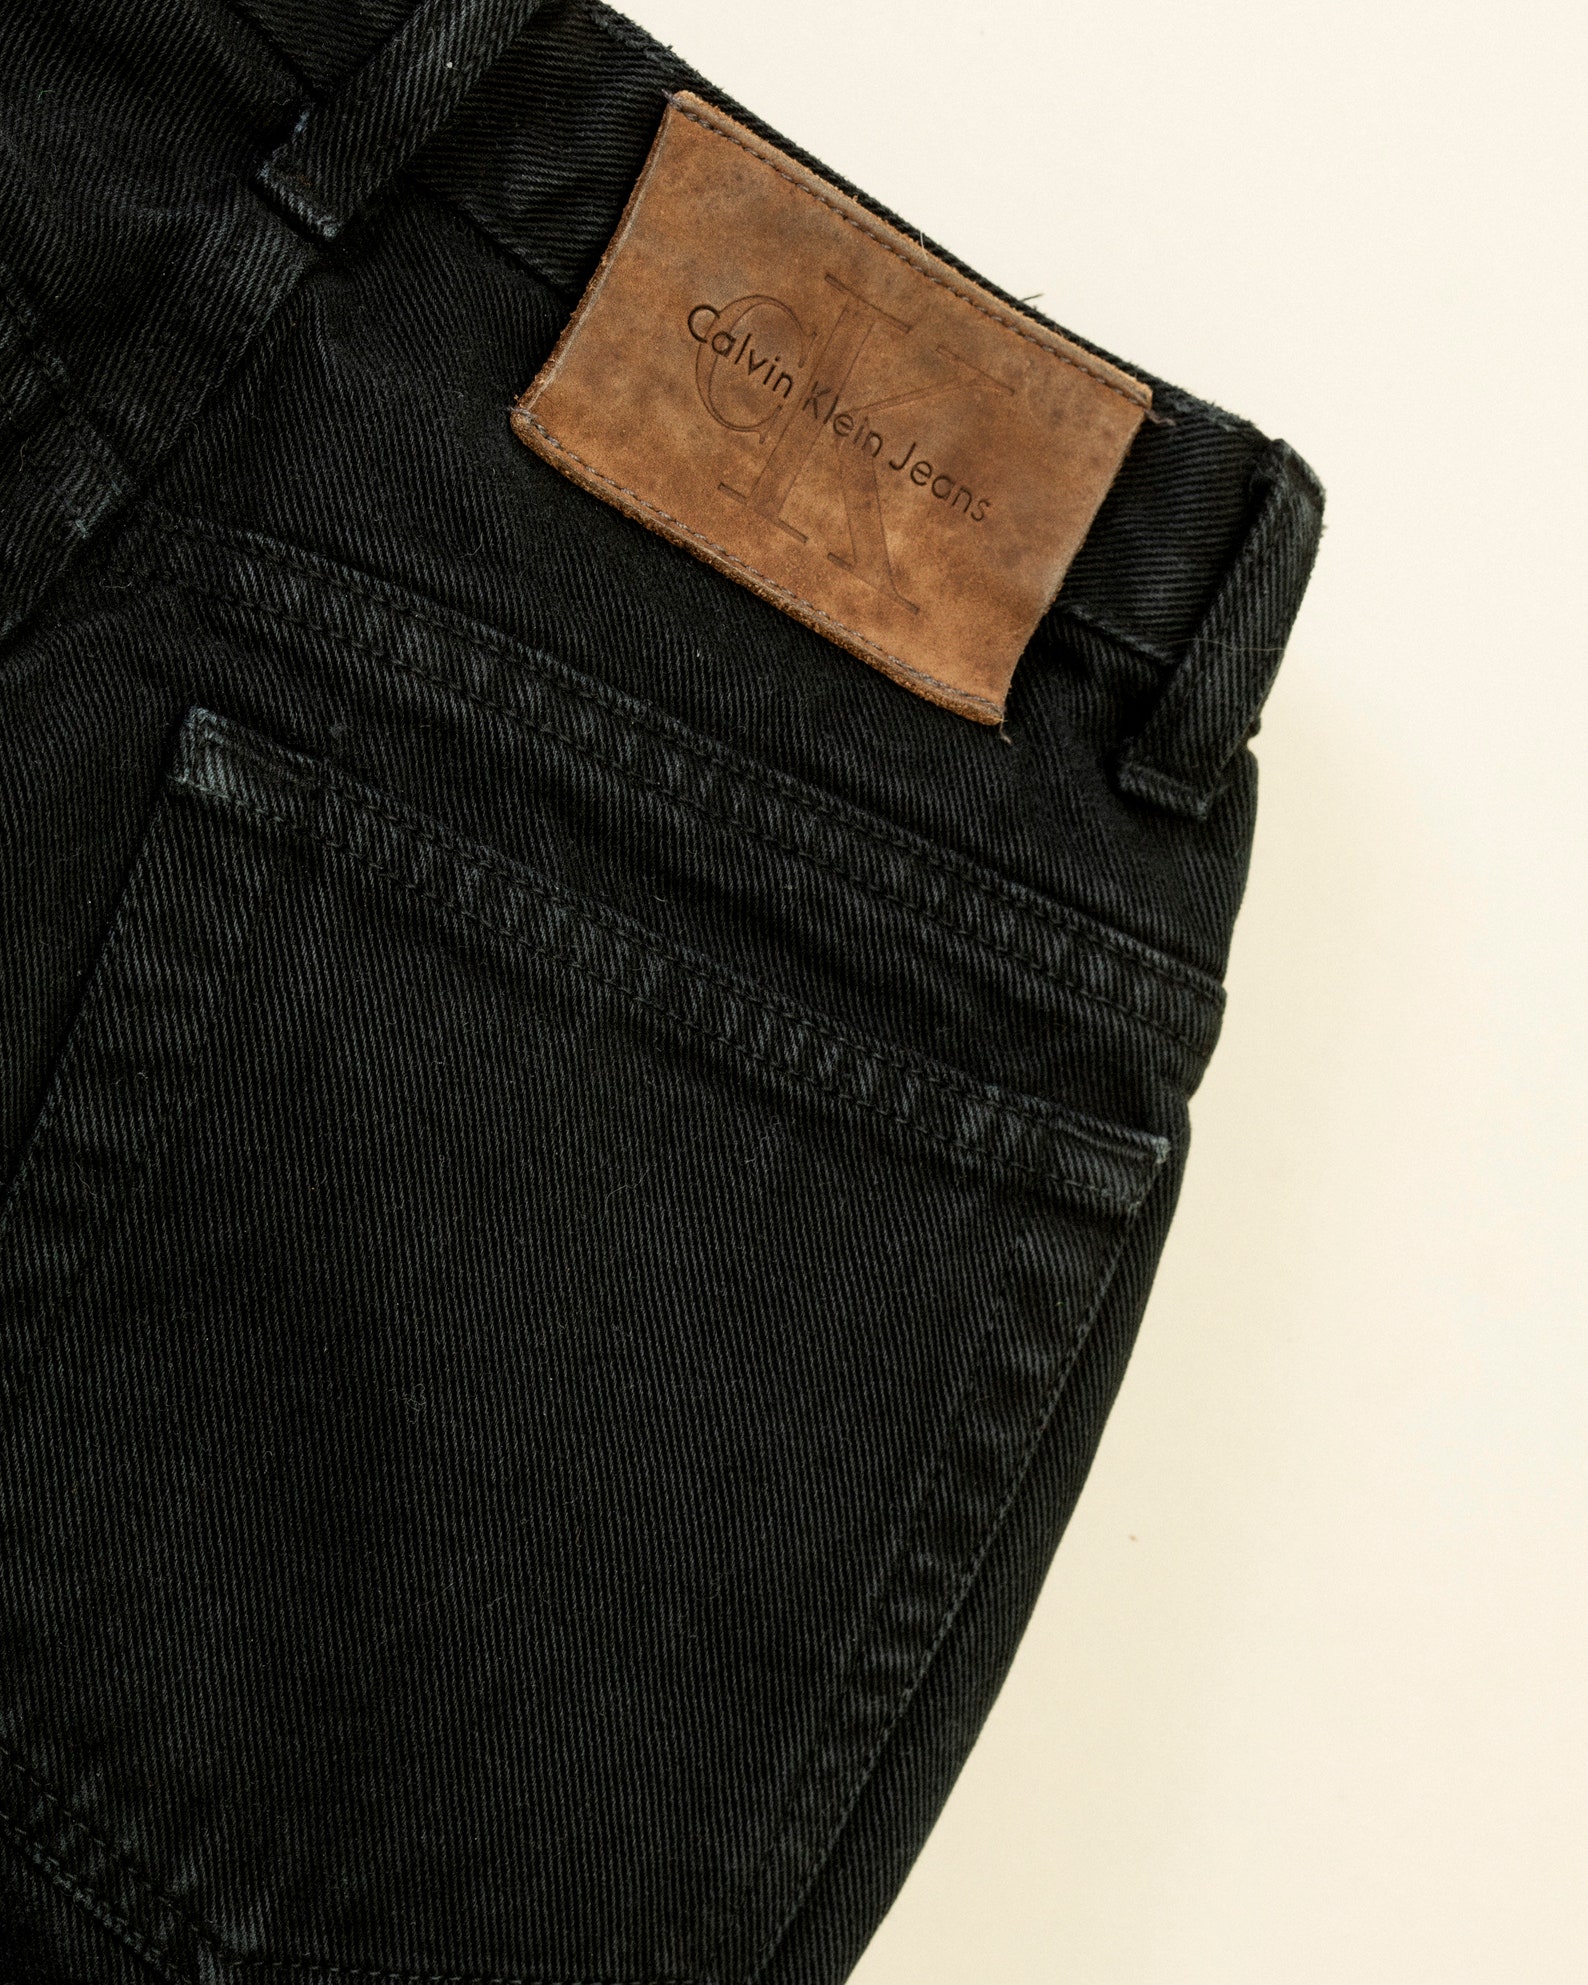 Vintage Black Calvin Klein Jeans | Etsy